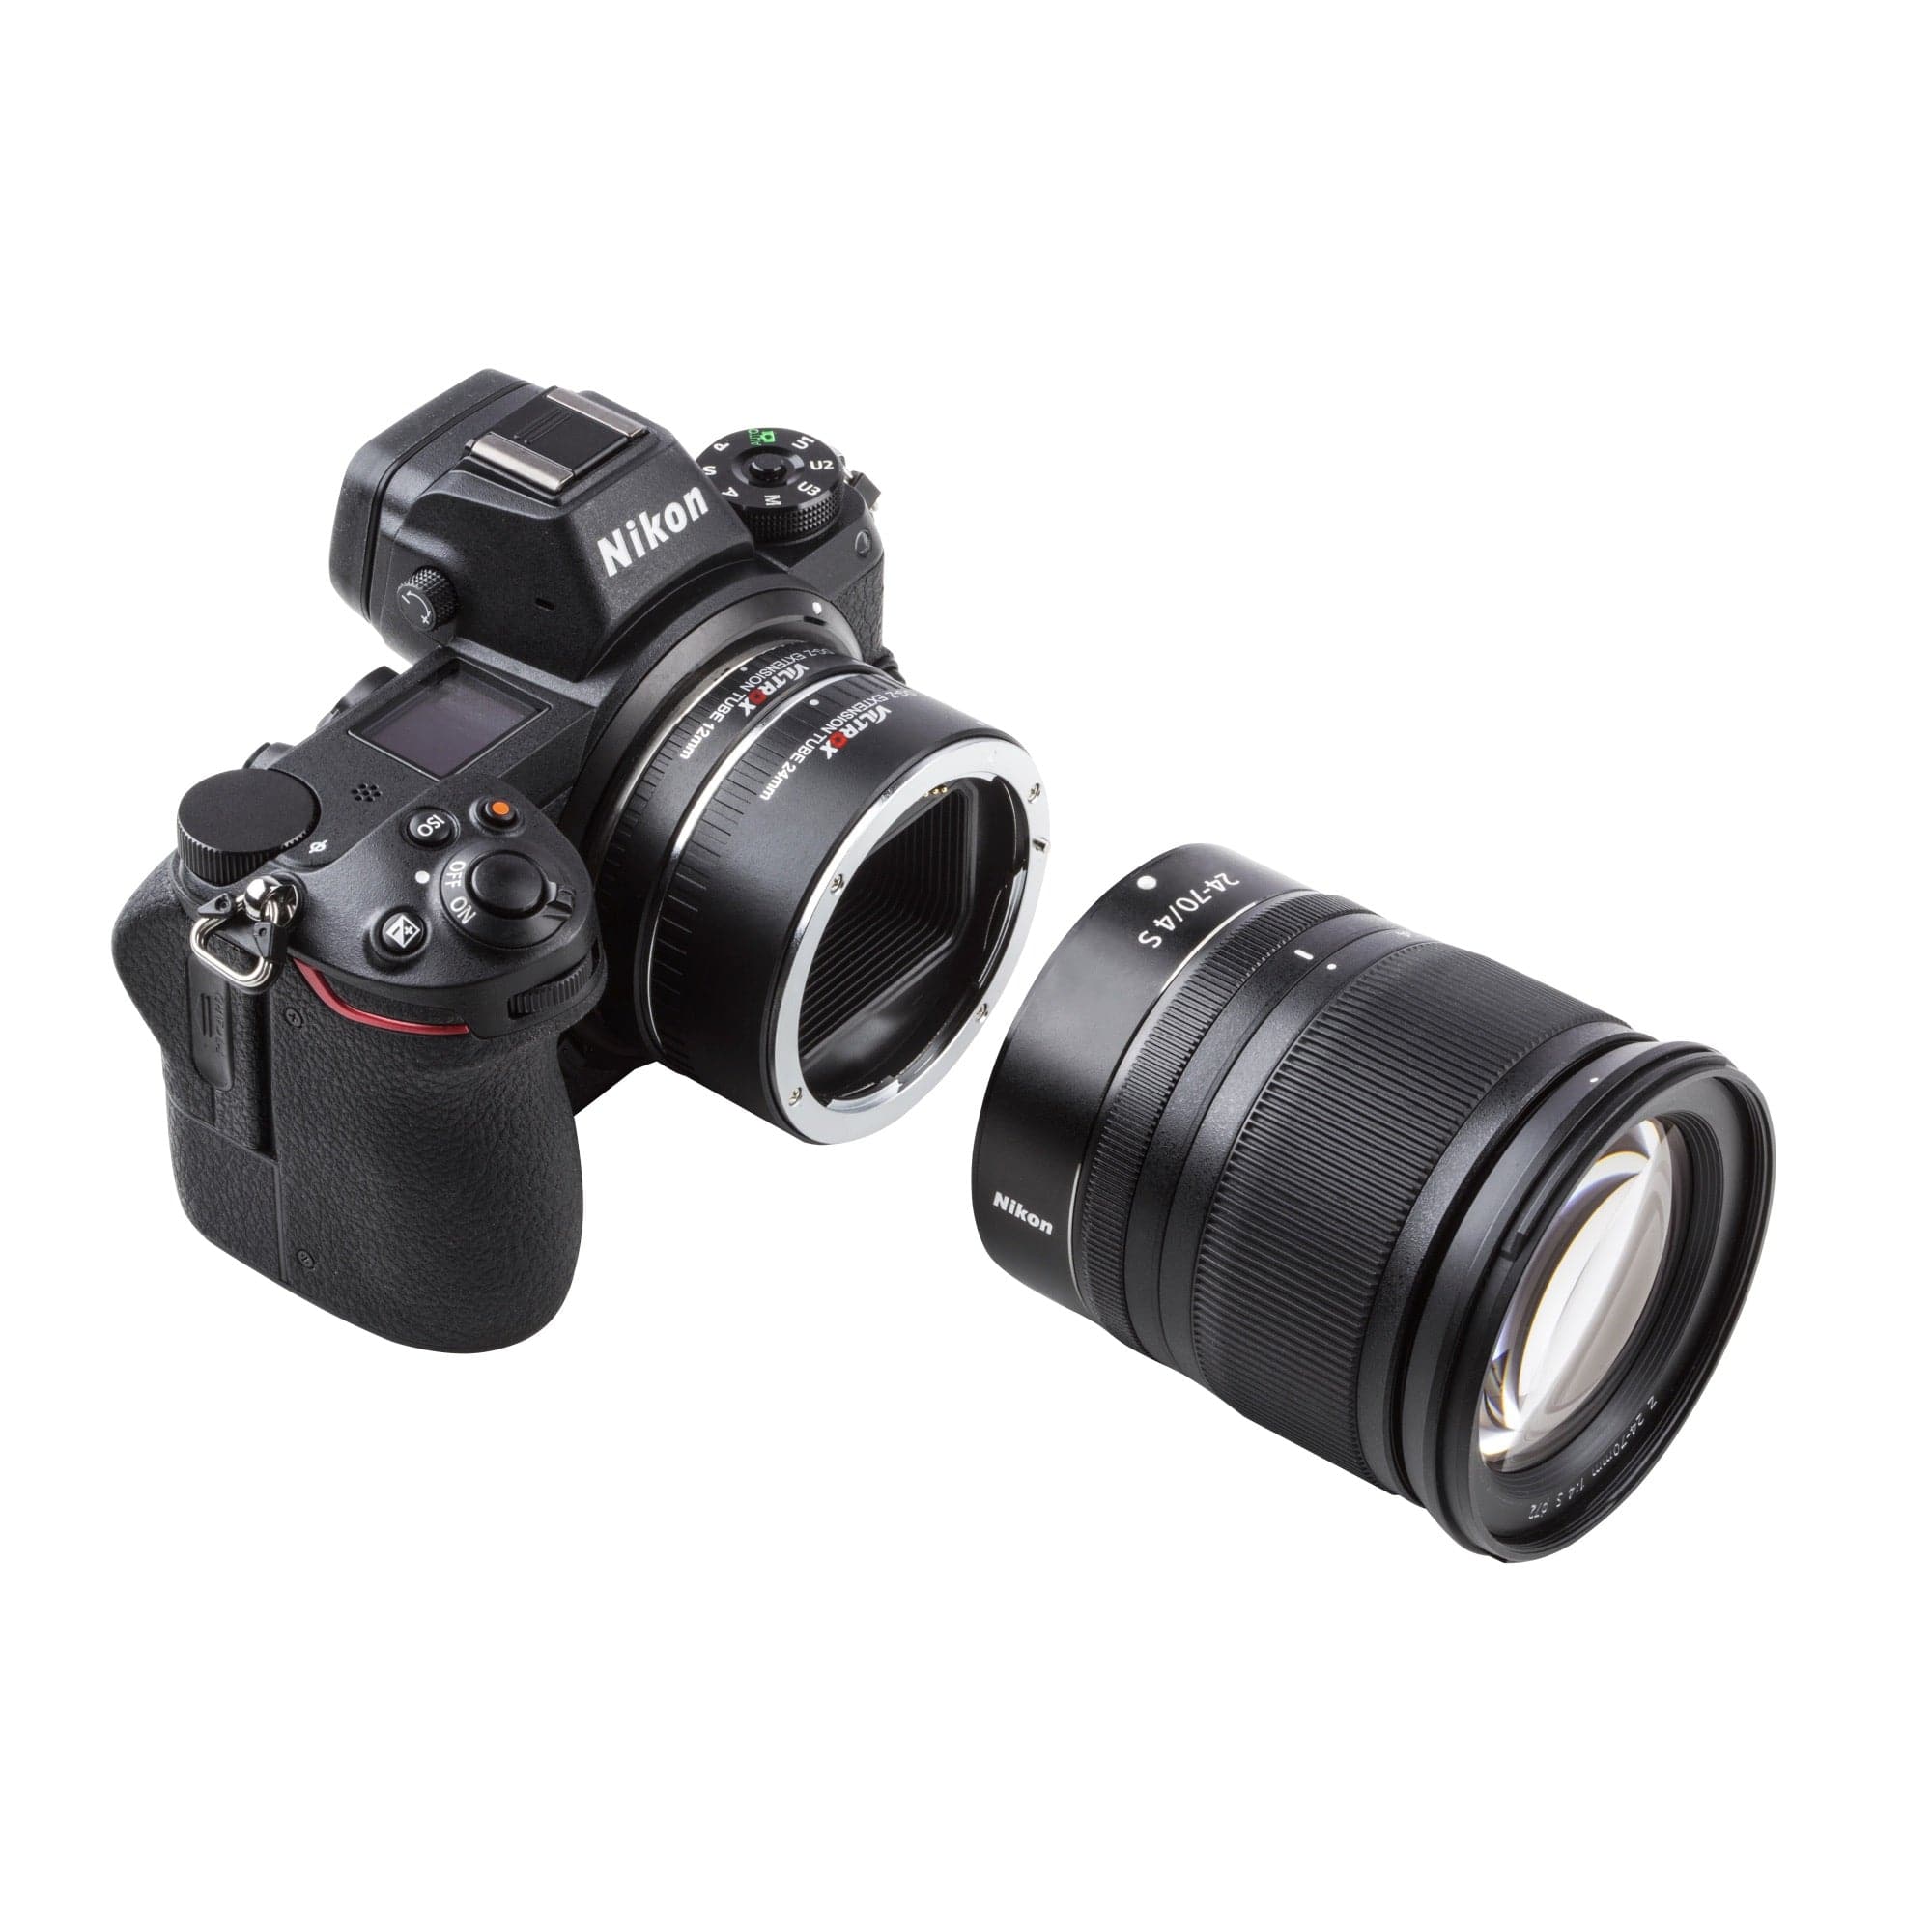 VILTROX DG-Z Brass Bayonet Autofocus Macro Extension Tube Ring for Nikon Z6 Z7 Z50 Mirrorless Camera